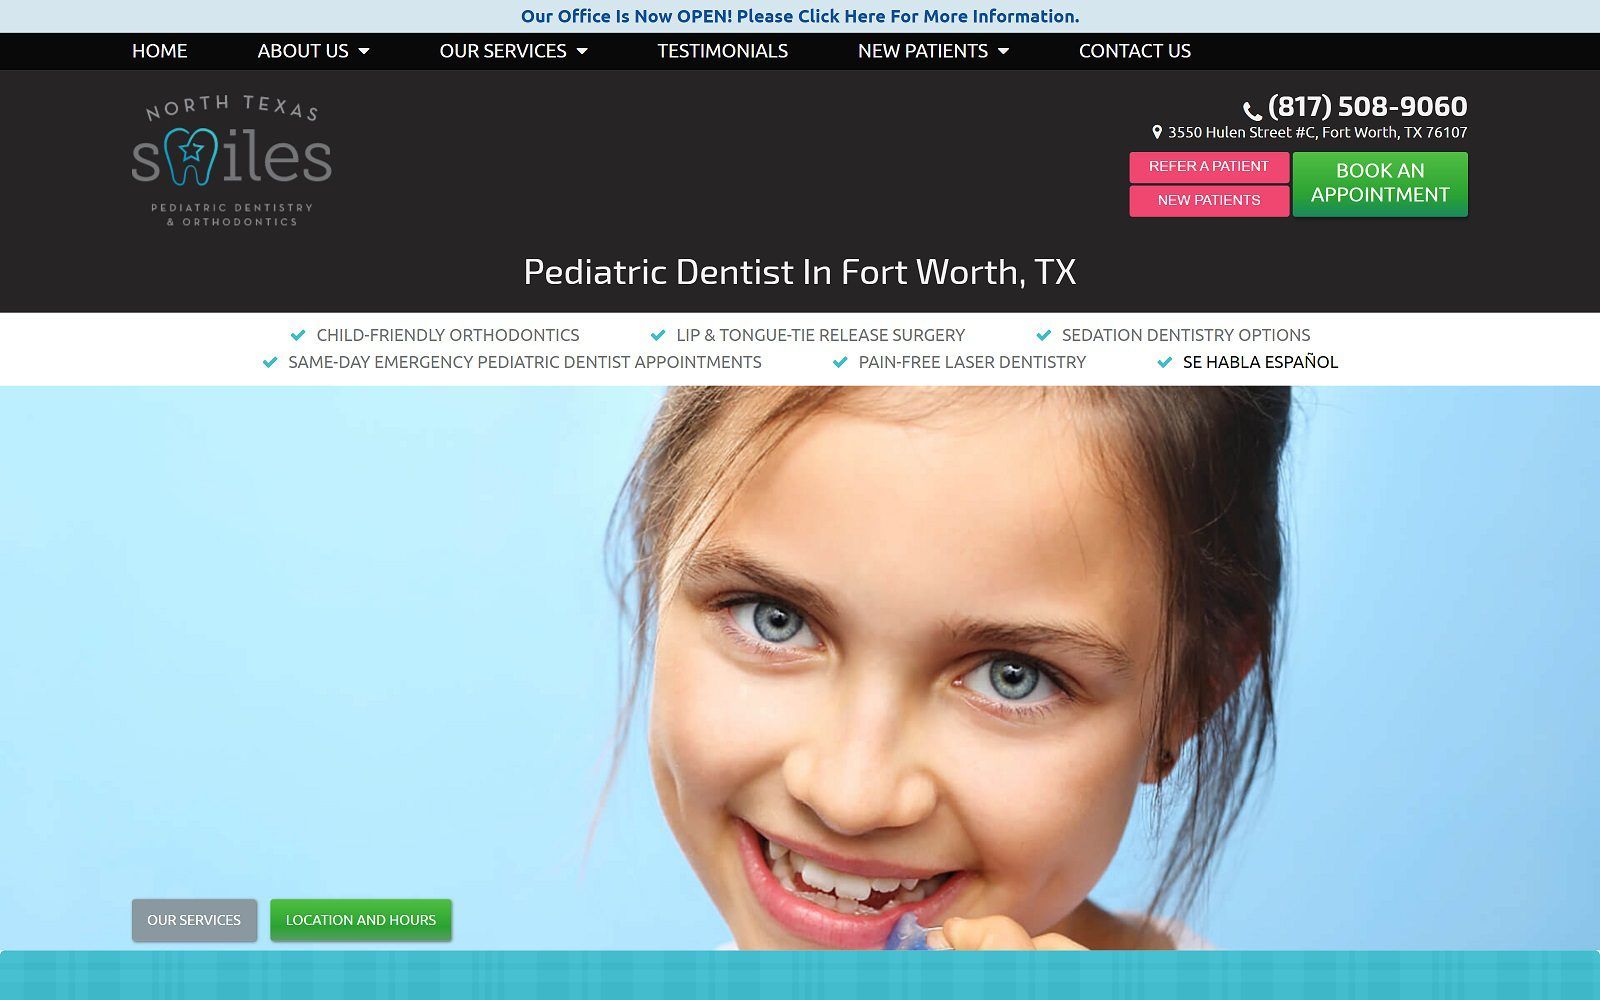 The screenshot of north texas smiles pediatric dentistry & orthodontics website